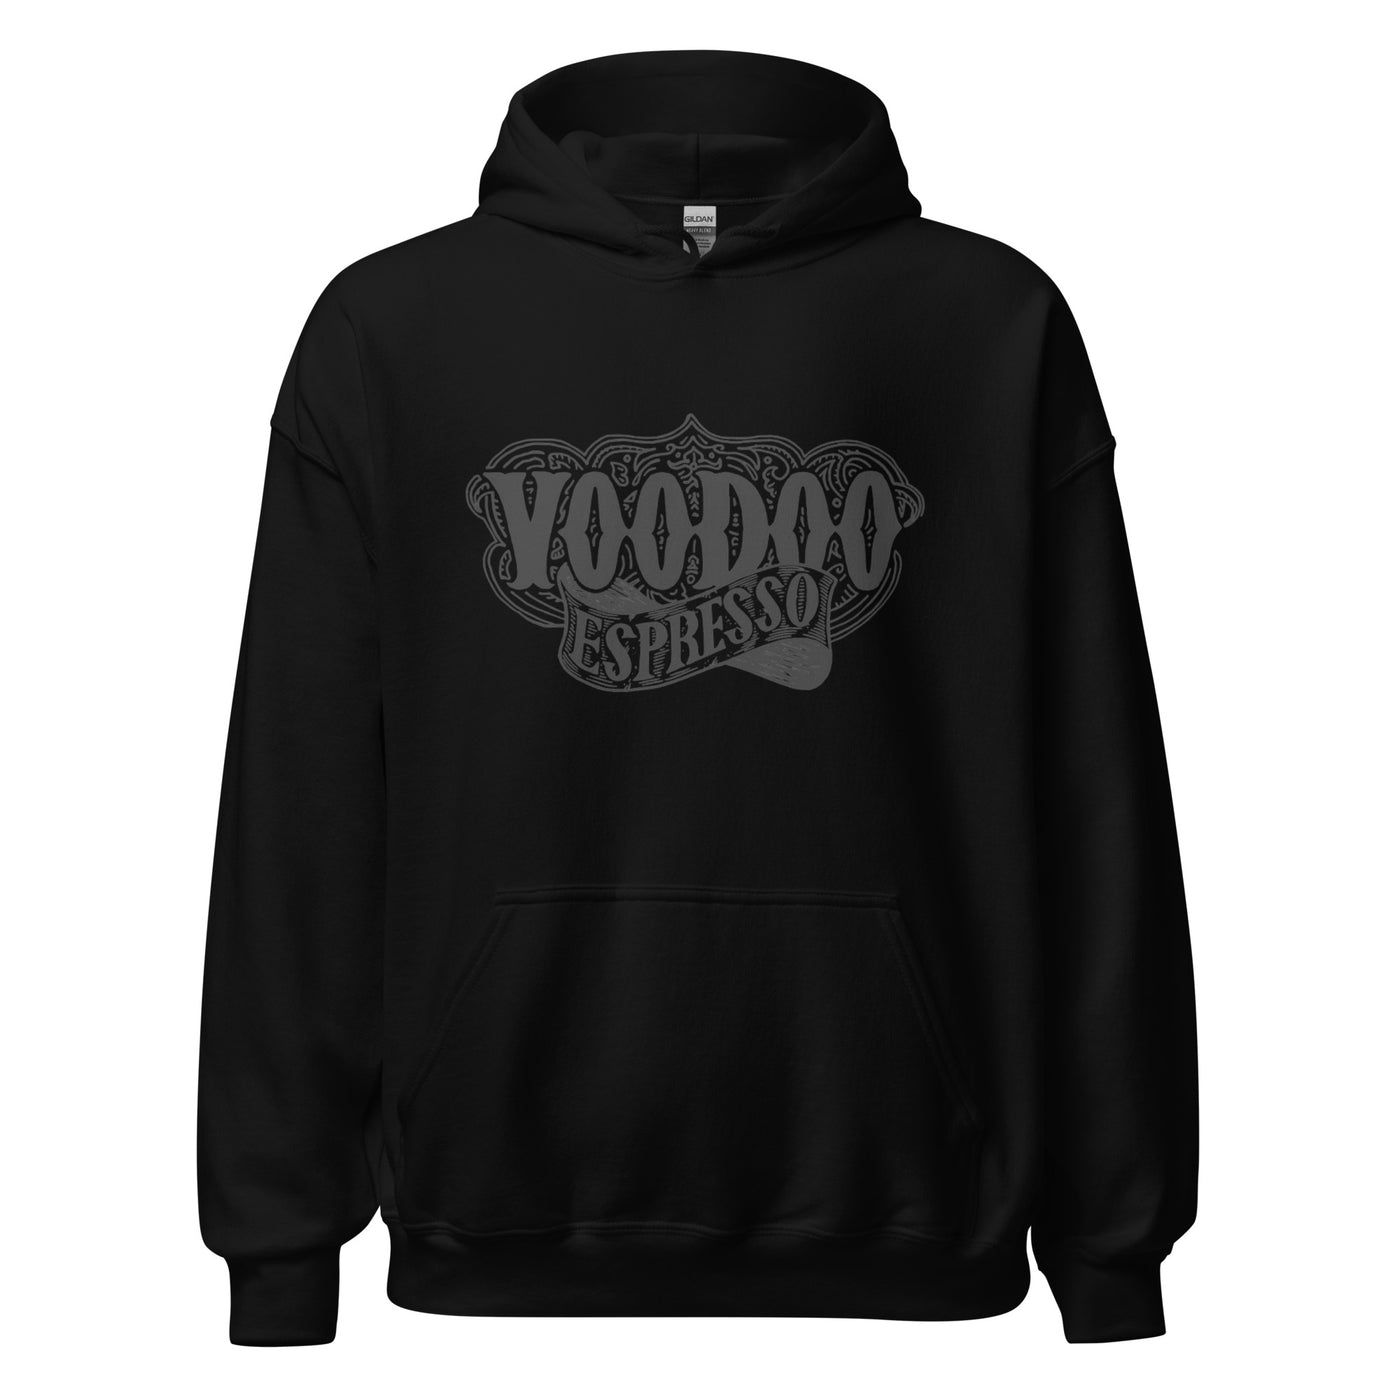 Unisex Voodoo Espresso Hoodie - VOODOO COFFEE COMPANY